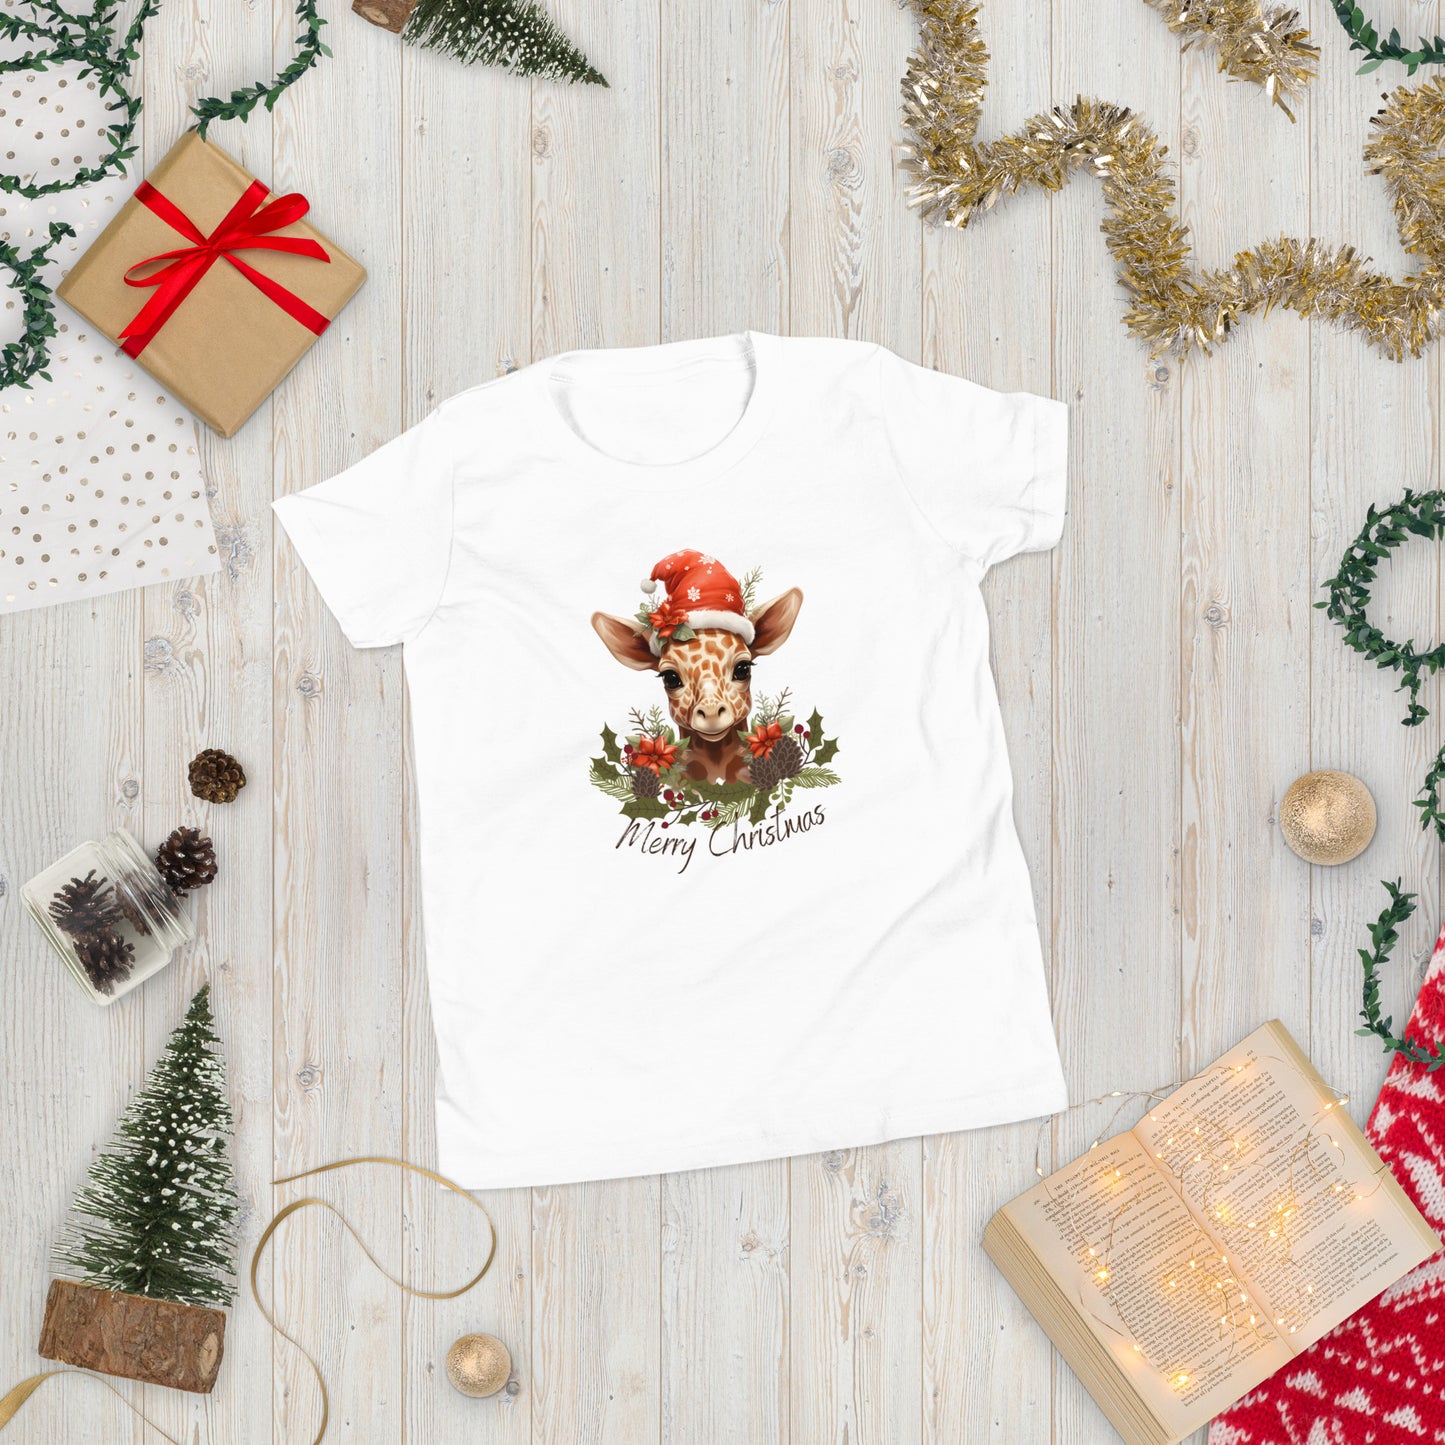 Christmas Giraffe T-Shirt - High Quality Festive Family Teenager T-Shirt, Gift for Giraffe Lovers, Cute Christmas Shirt, Youth Xmas Tee